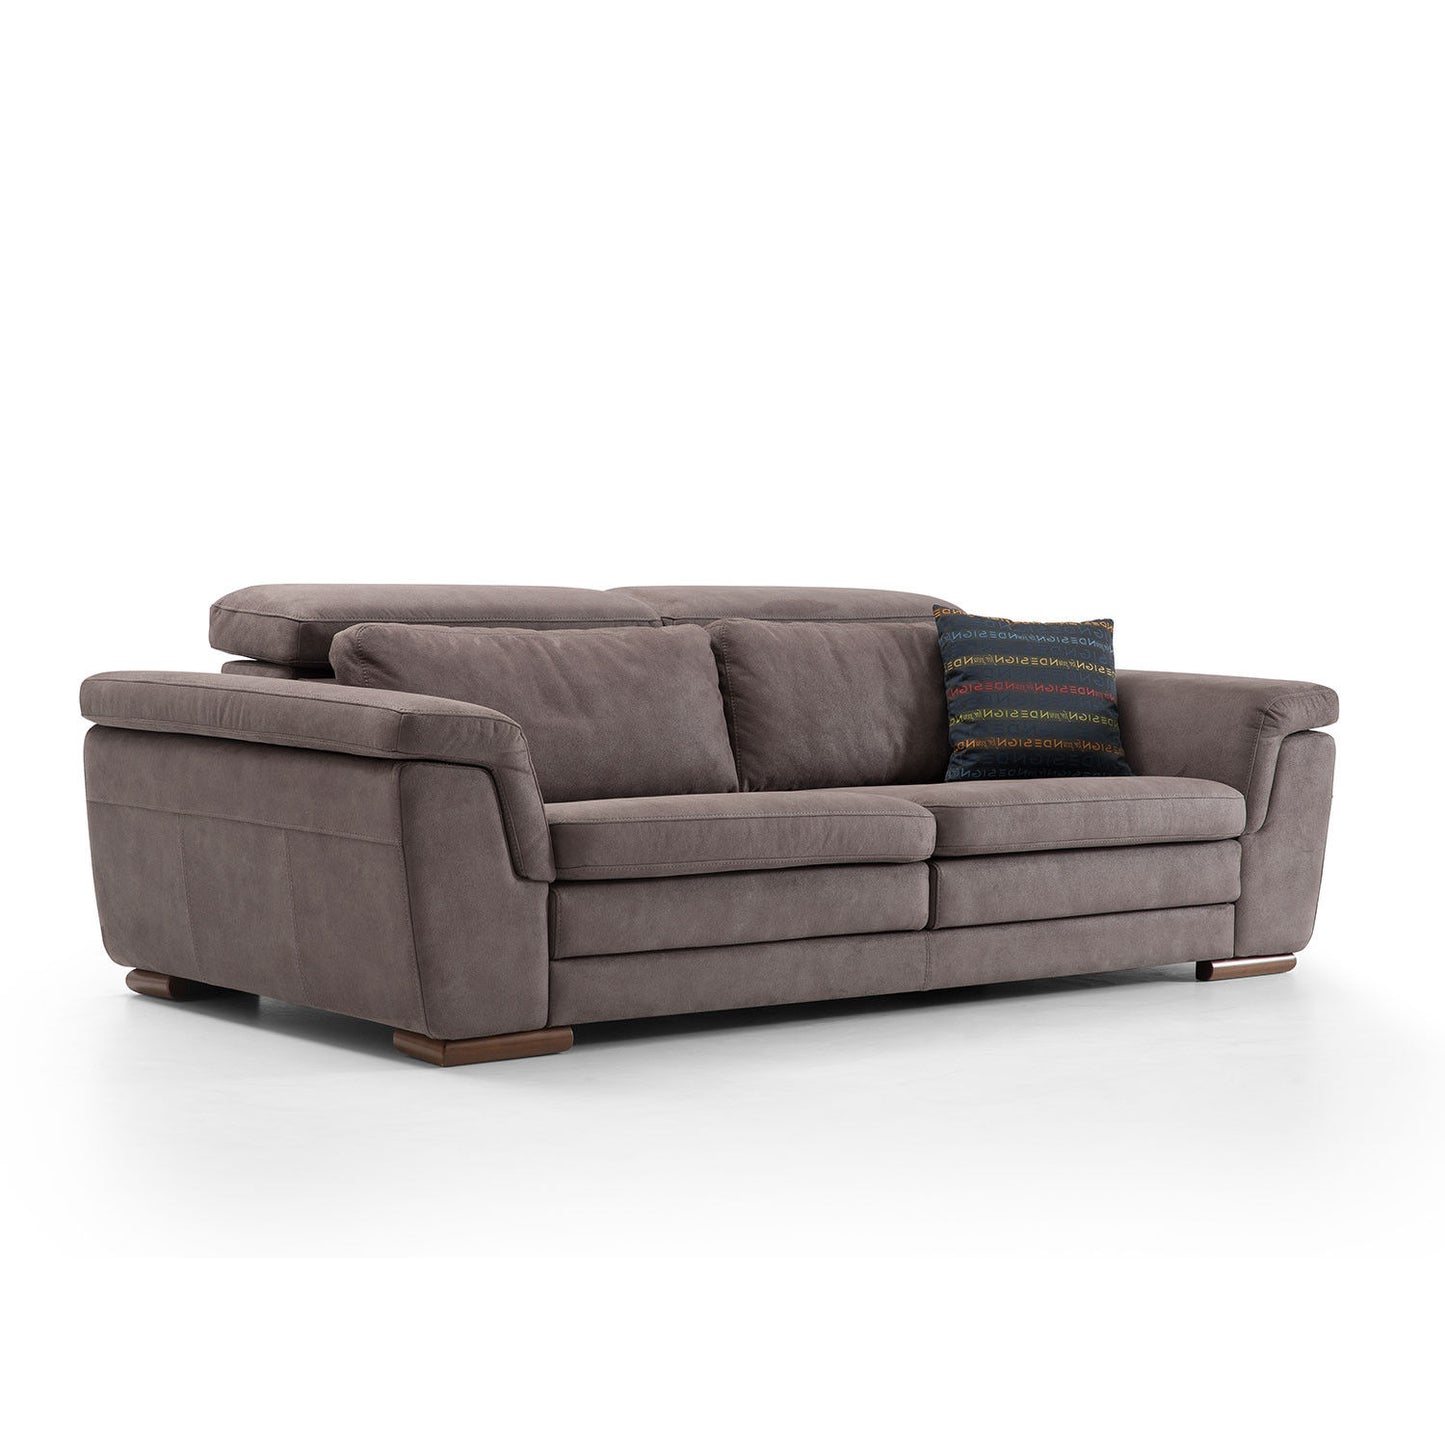 Mardini - 3-sæders sofa